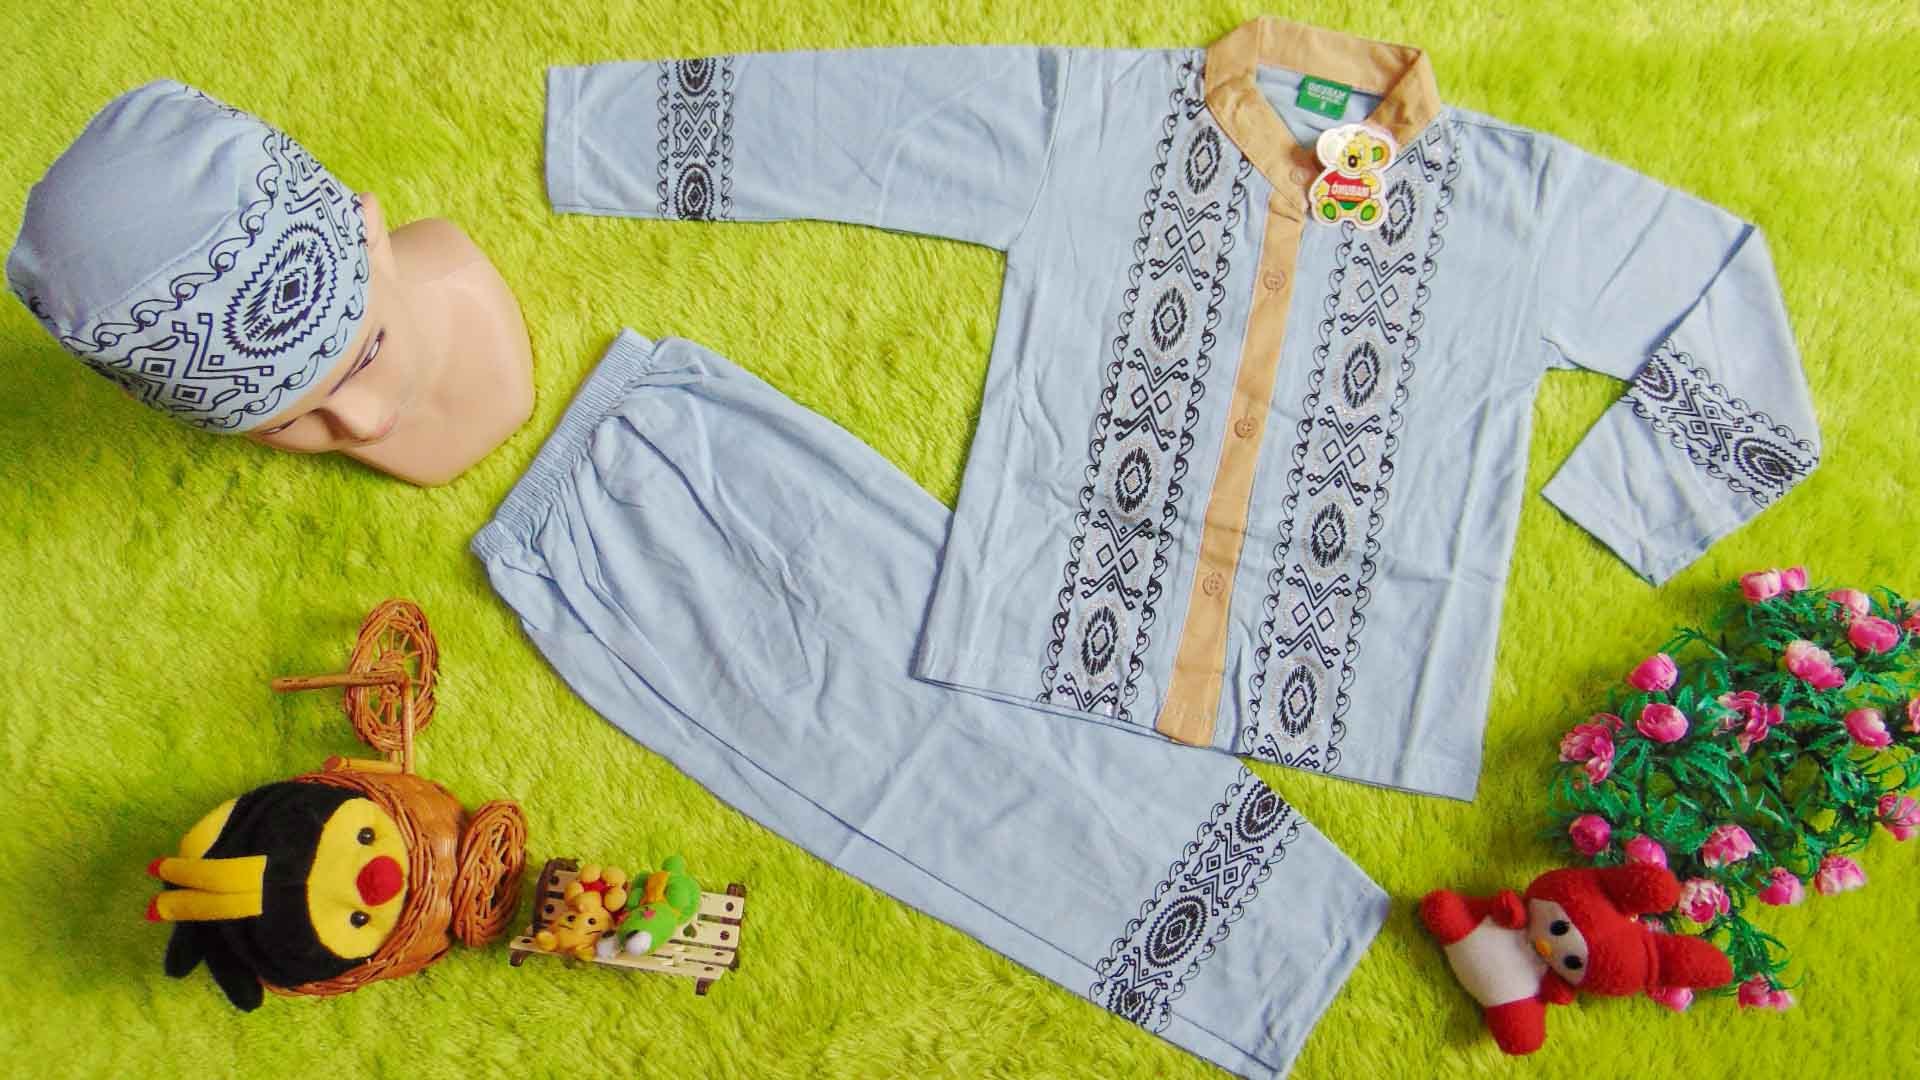 Ide Baju Lebaran Anak 1 Tahun 9fdy Paling Laris Setelan Baju Koko Muslim Lebaran Ramadhan